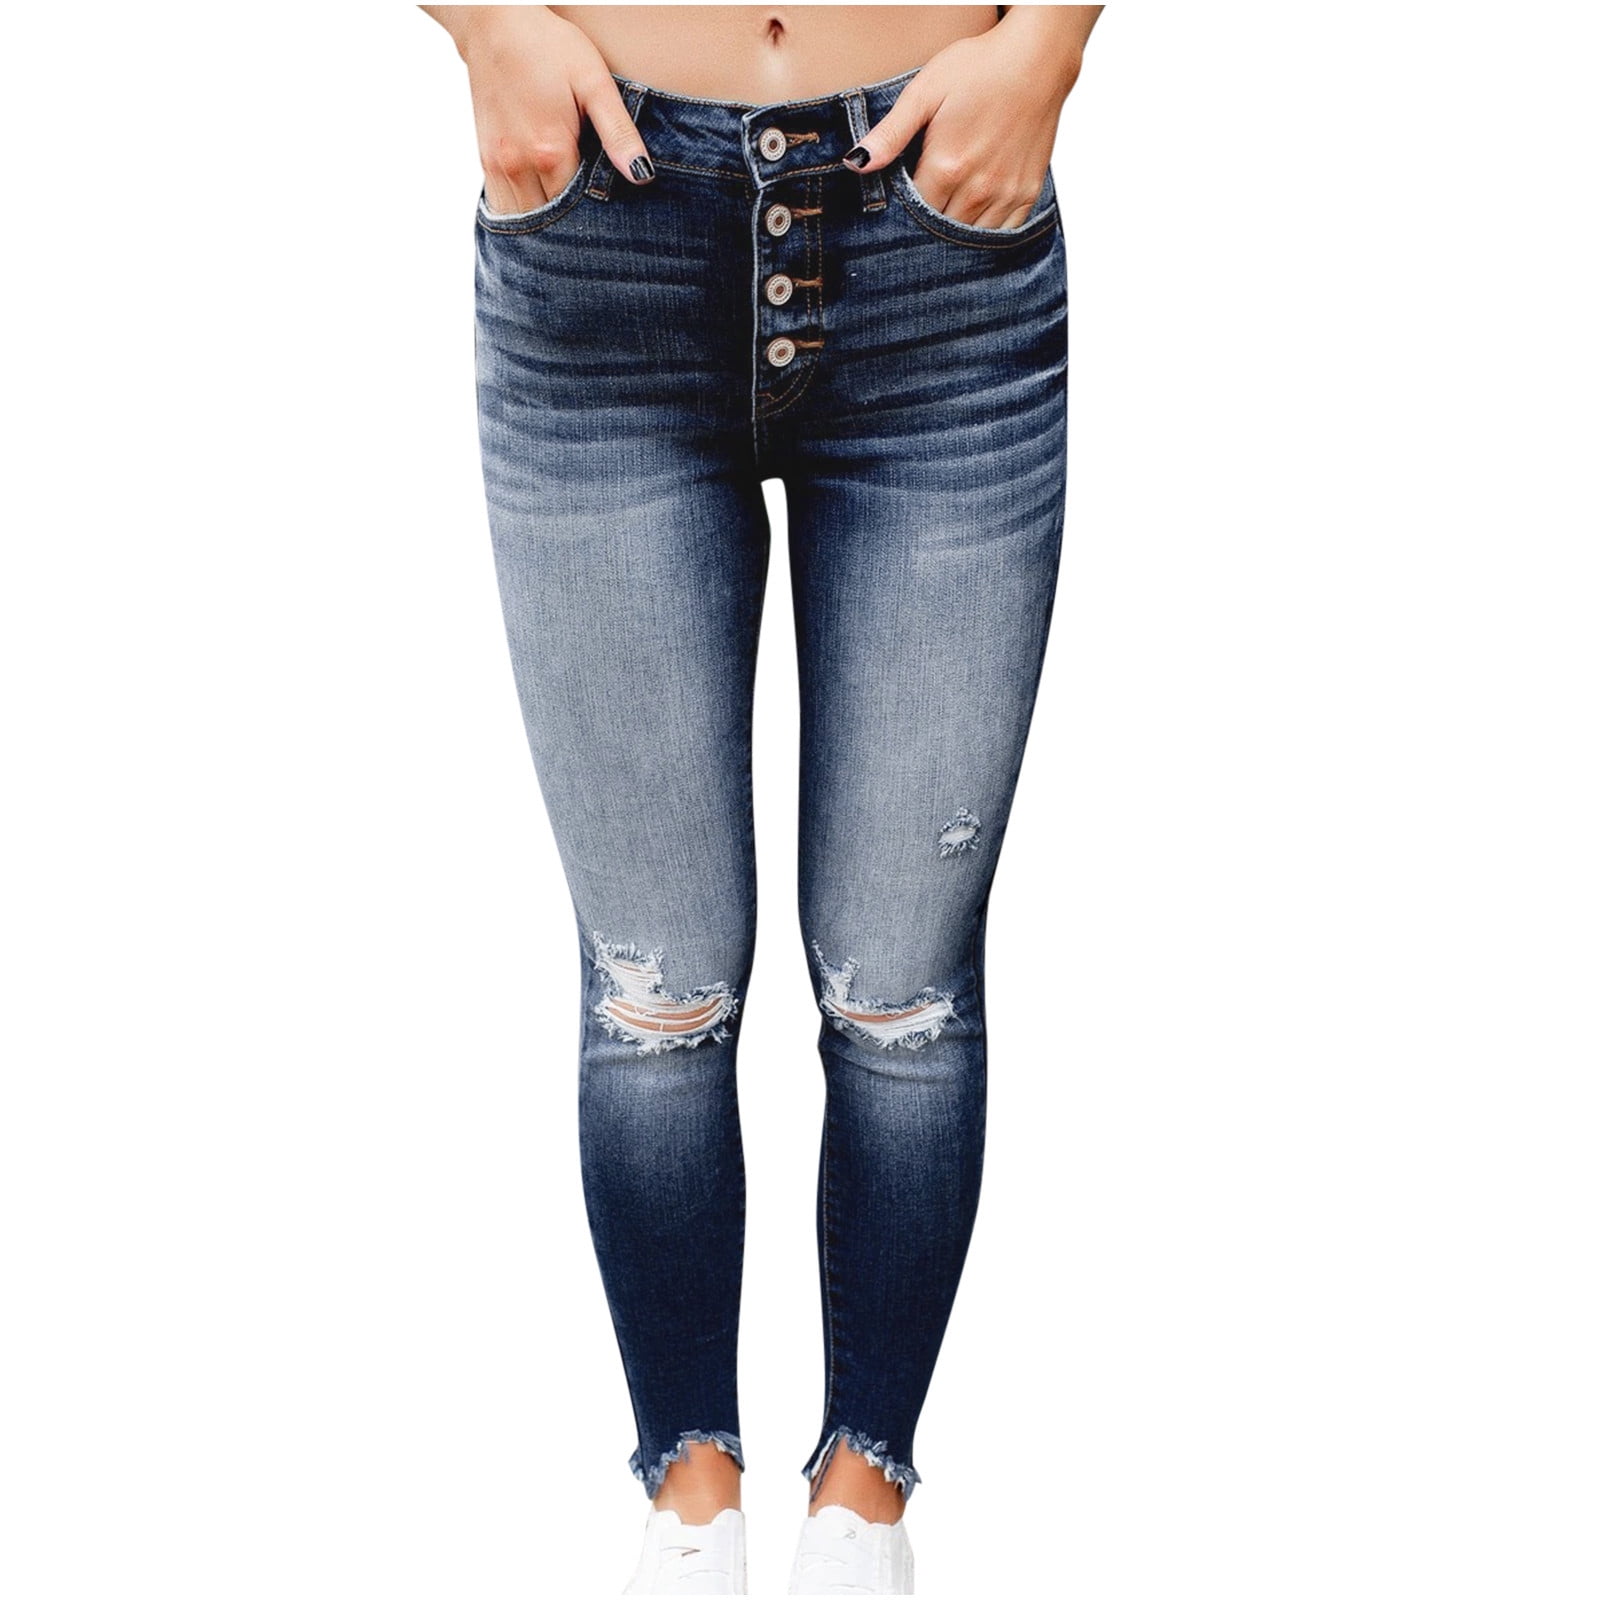 RYRJJ Women's Skinny Destroyed Raw Hem Jeans High Waist Ripped Hole  Boyfriend Stretchy Denim Pants(Light Blue,XL) 